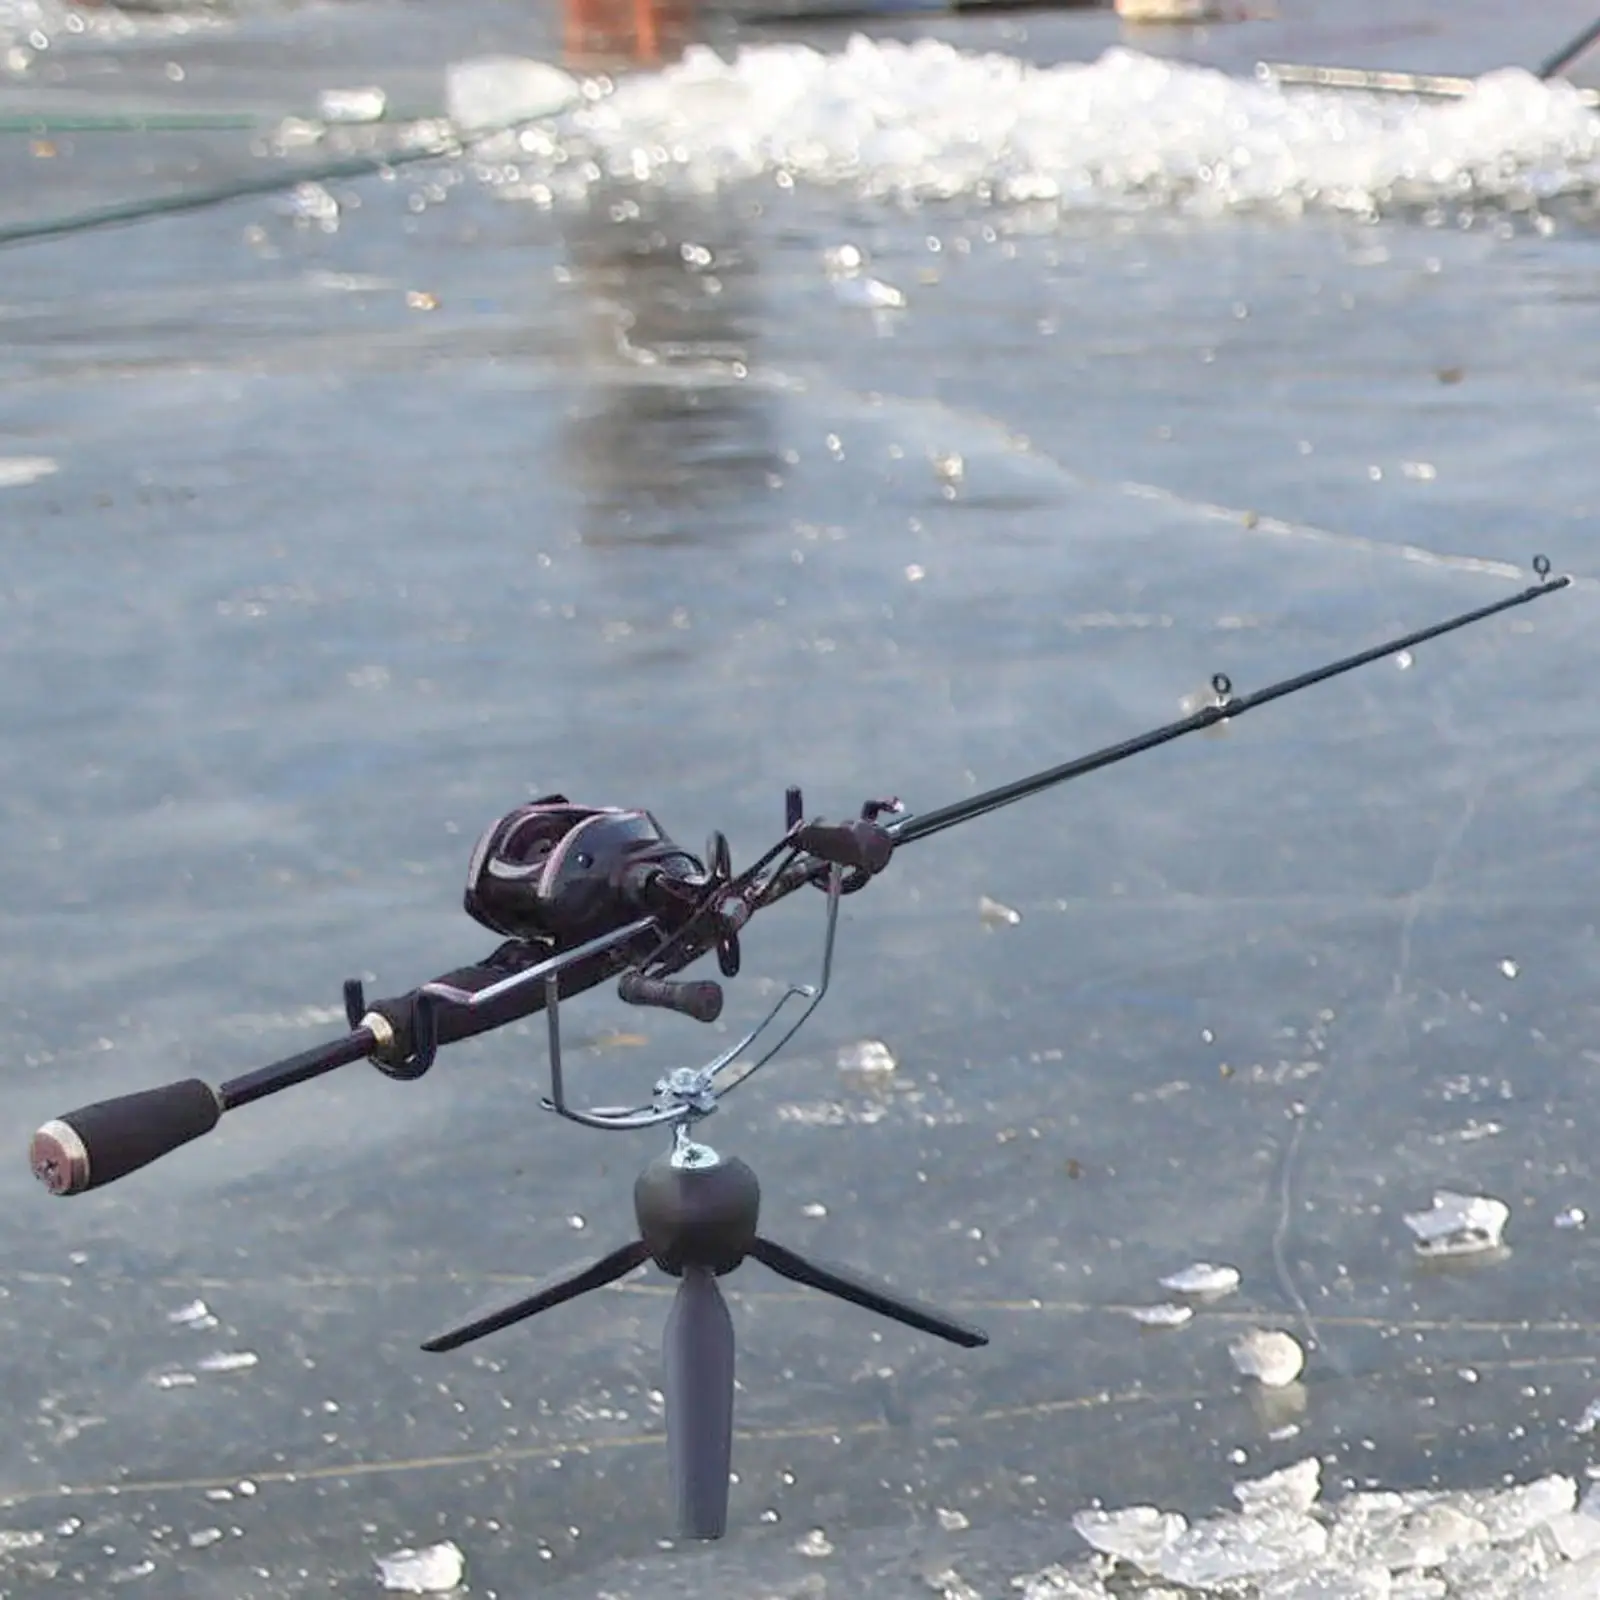 https://ae01.alicdn.com/kf/S0c55cec665e74e75a257b26d87e0222ds/Ice-Fishing-Rod-Holder-Adjustable-Angle-Aluminum-Alloy-Rack-Fishing-Rod-Rest.jpg